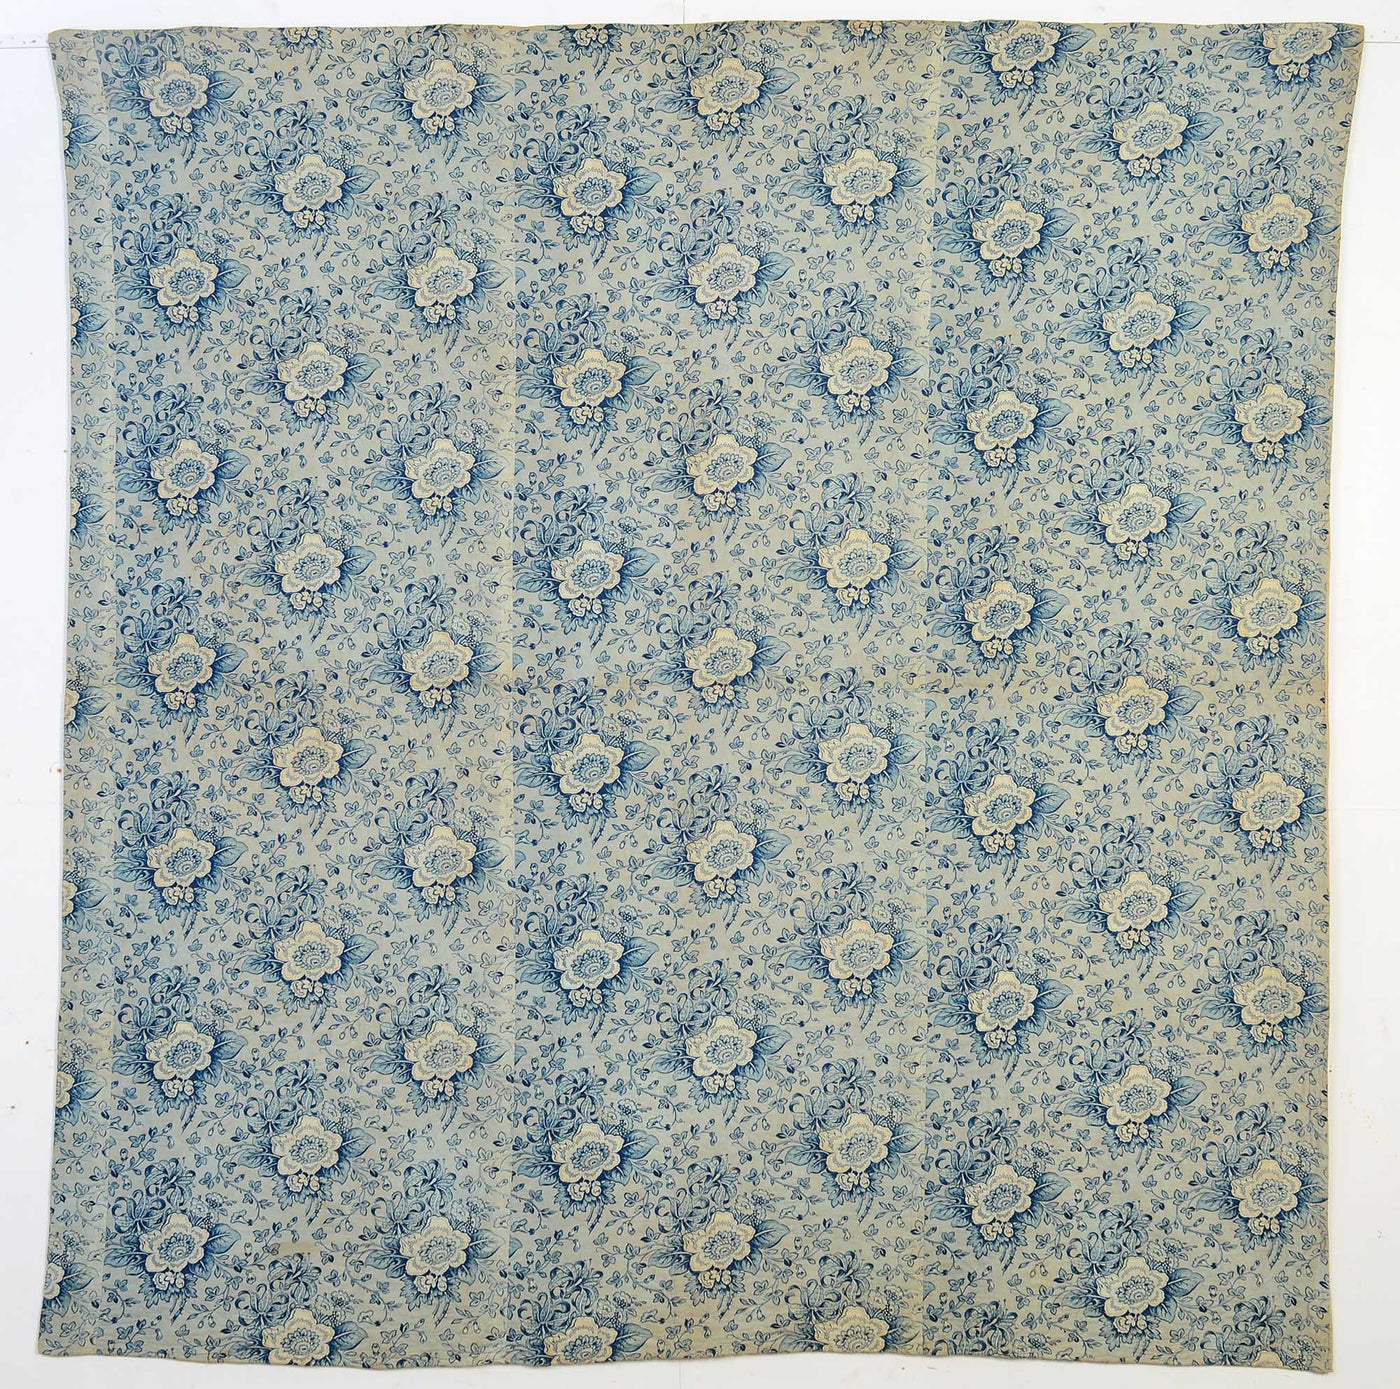 chintz-wholecloth-reversible-quilt-1429566-front-view